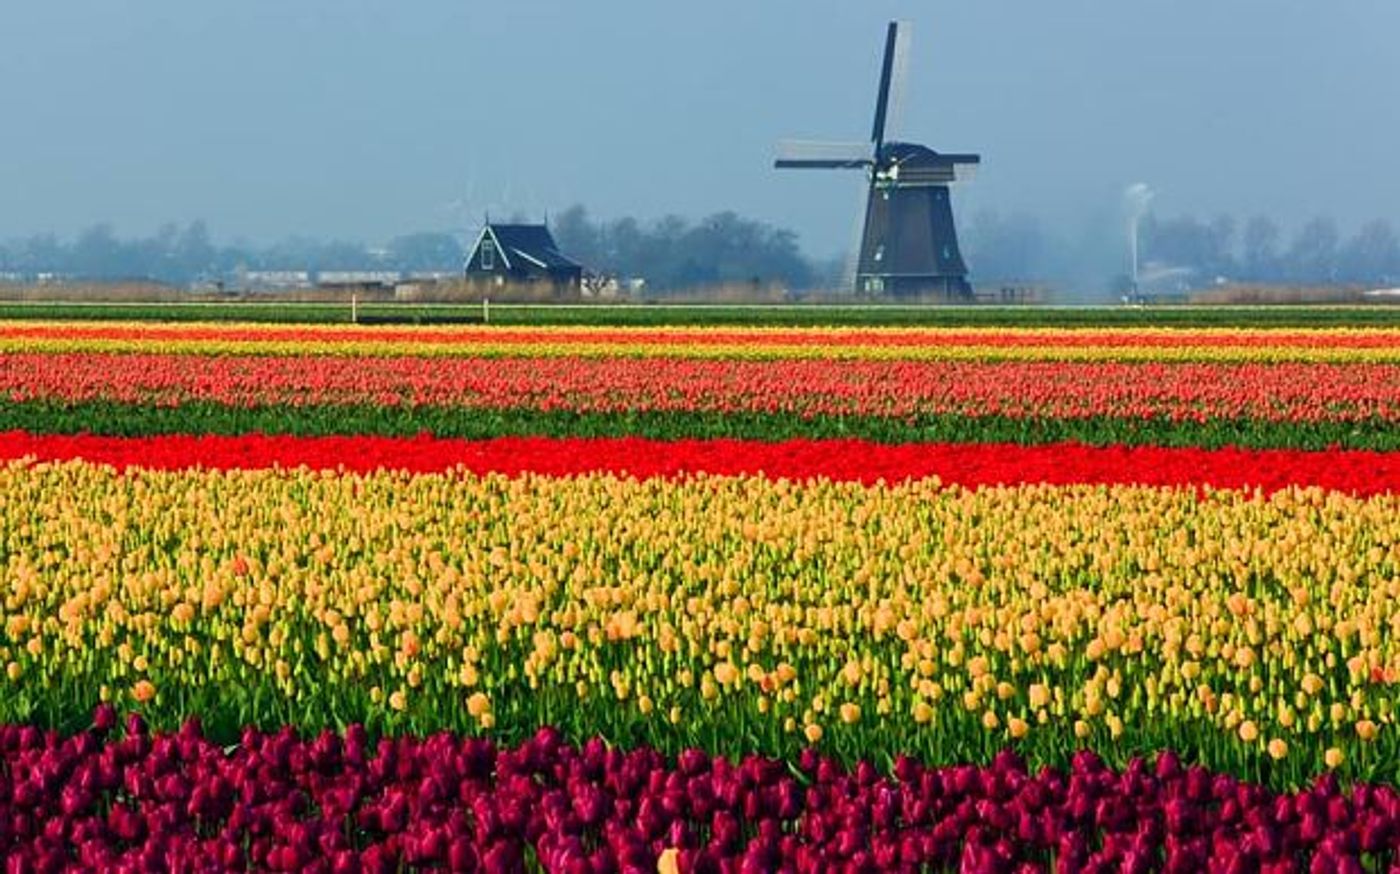 A tulip field in full bloom in Holland